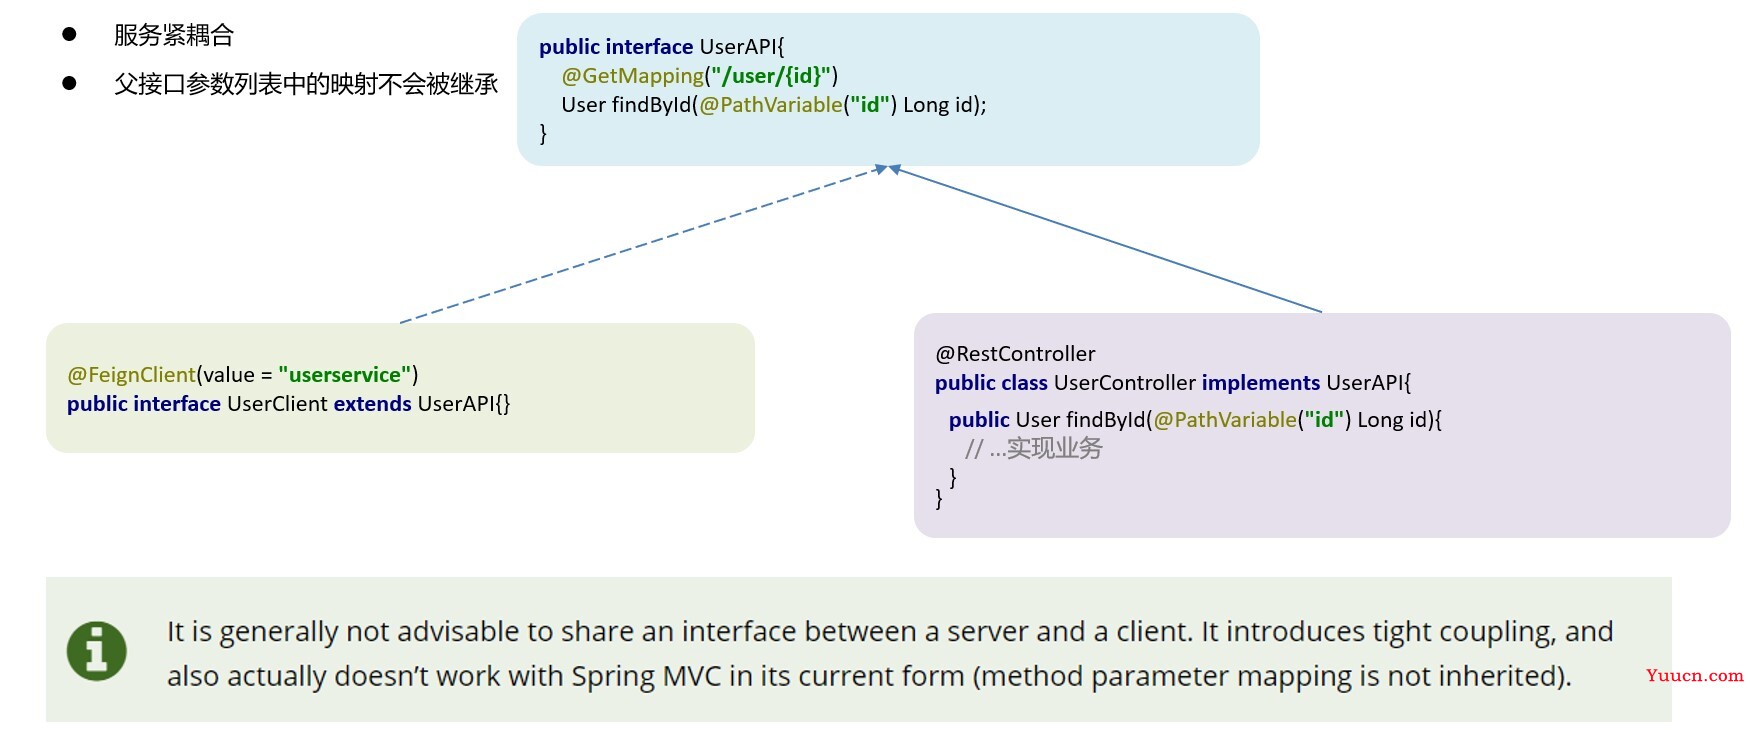 SpringCloud微服务框架复习笔记